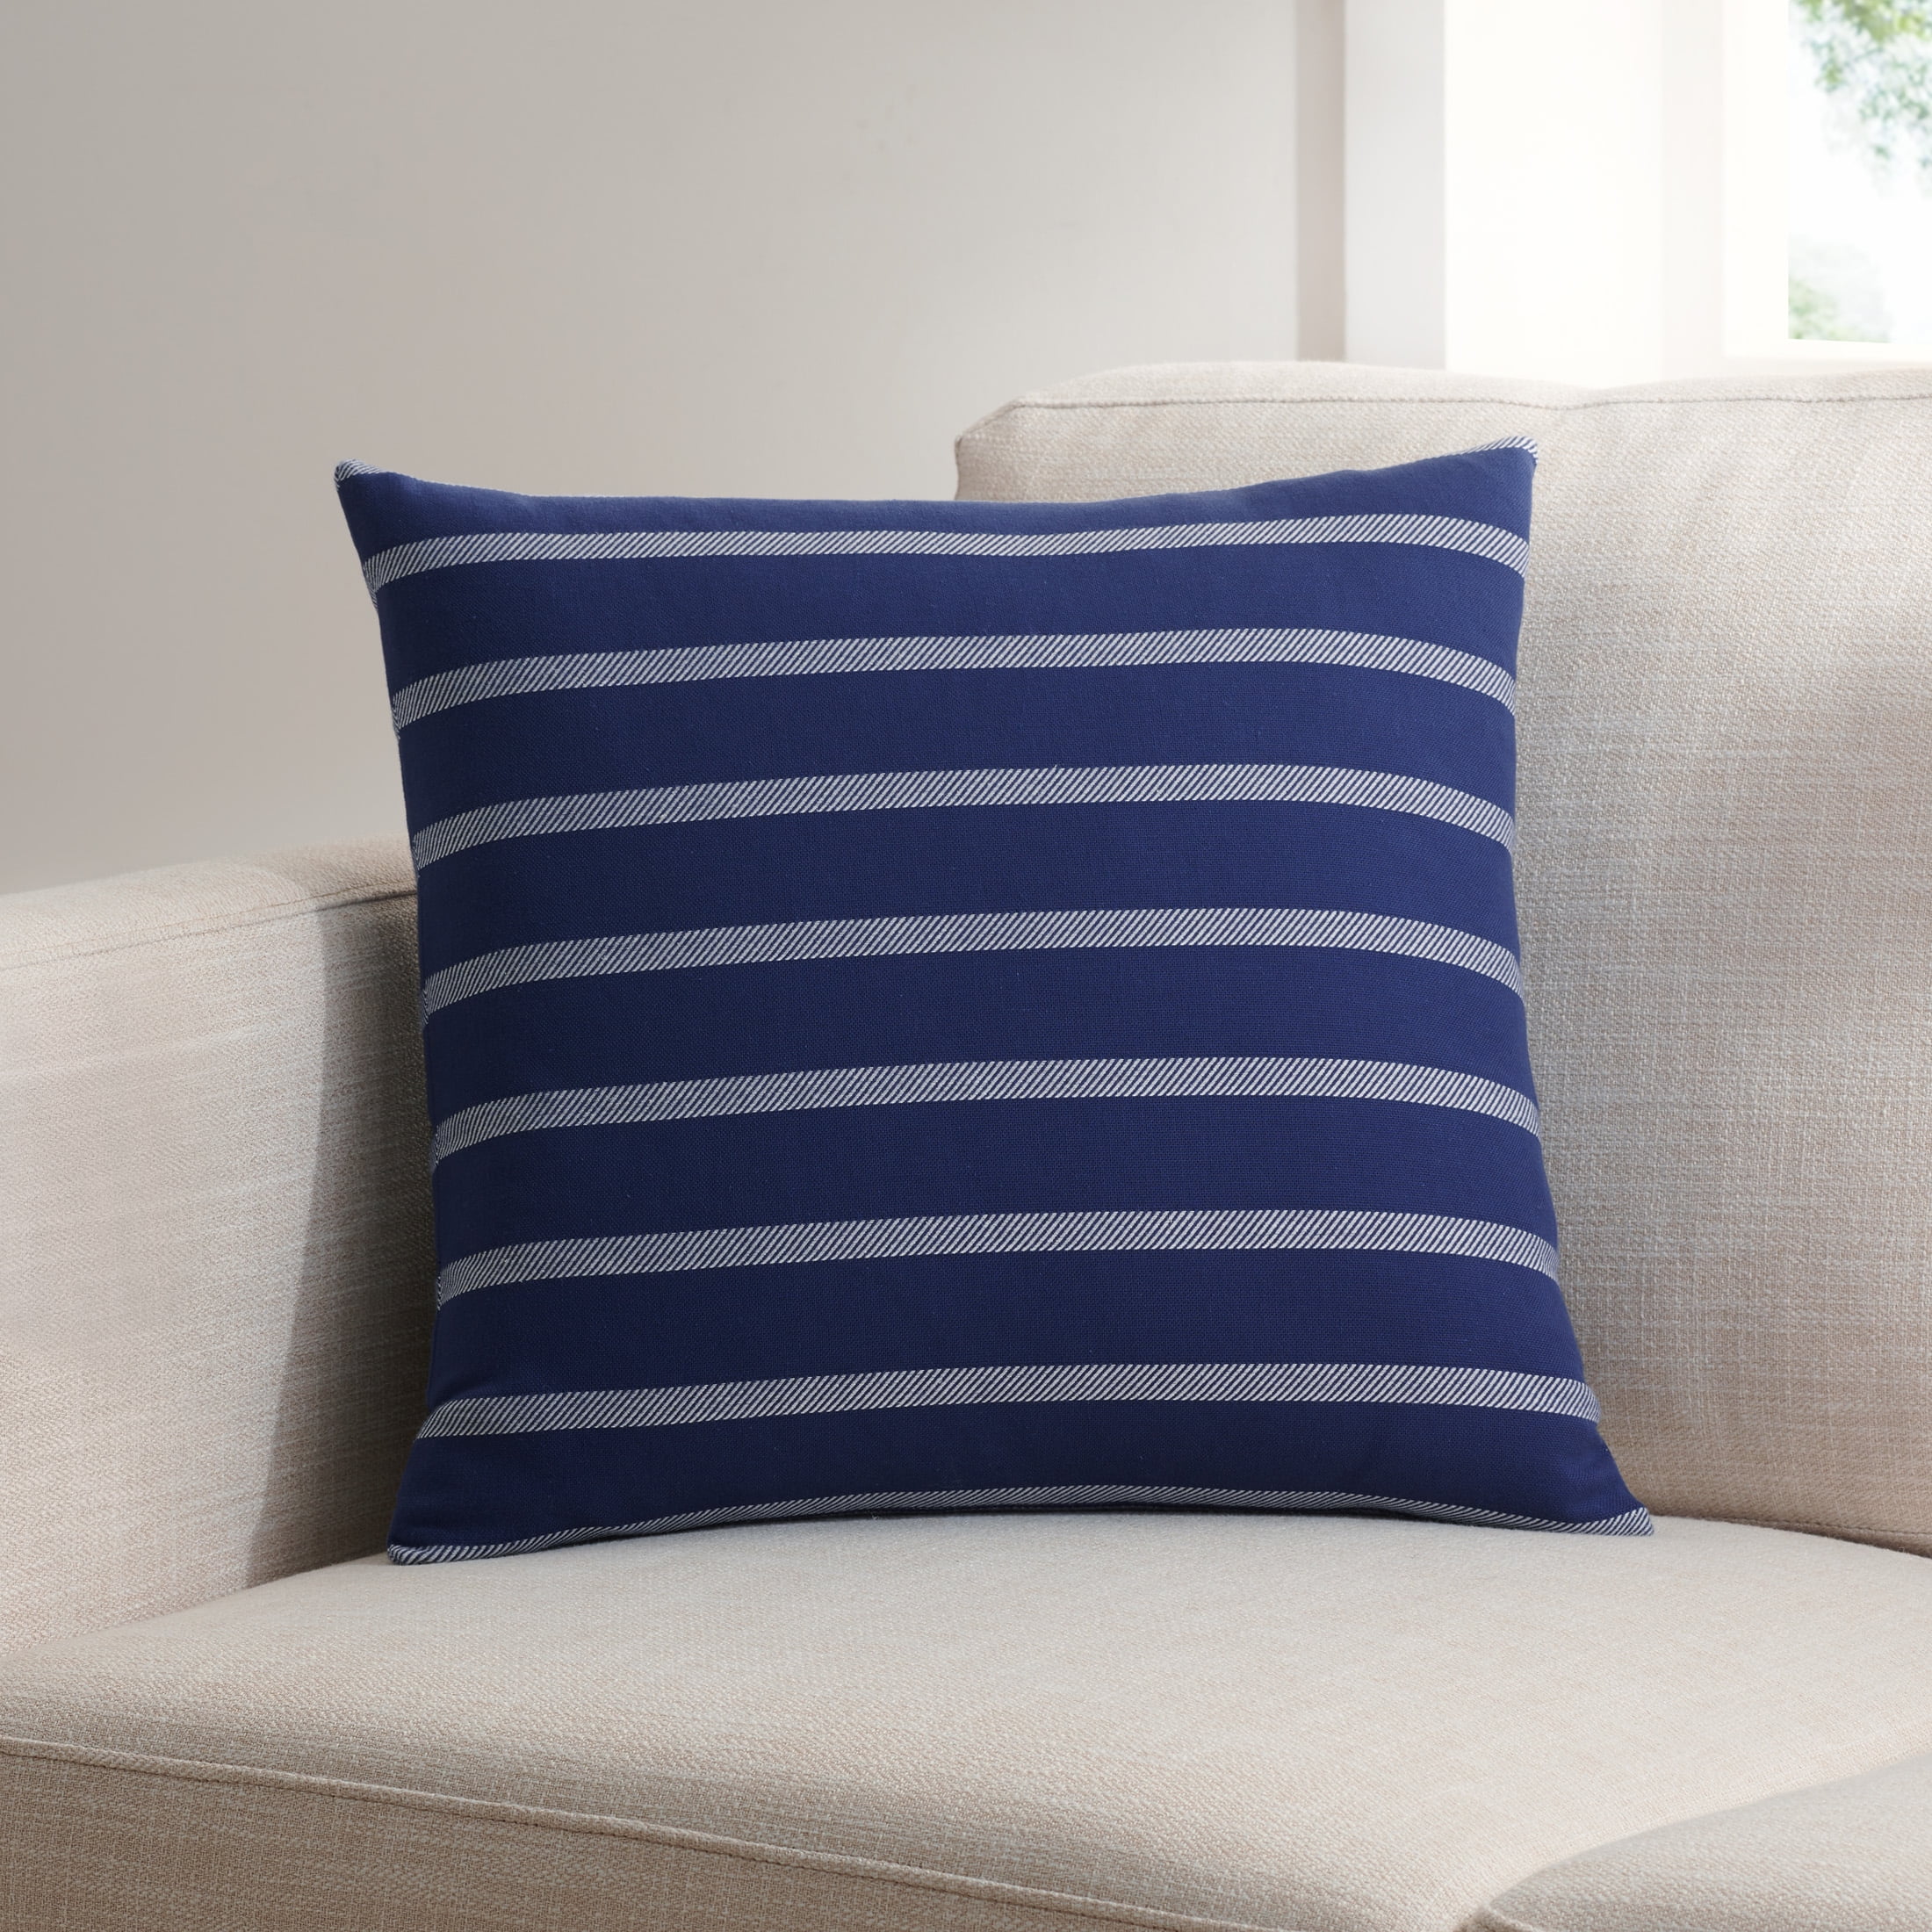 18X18 Dark Blue and White Abstract Stripe Throw Pillow